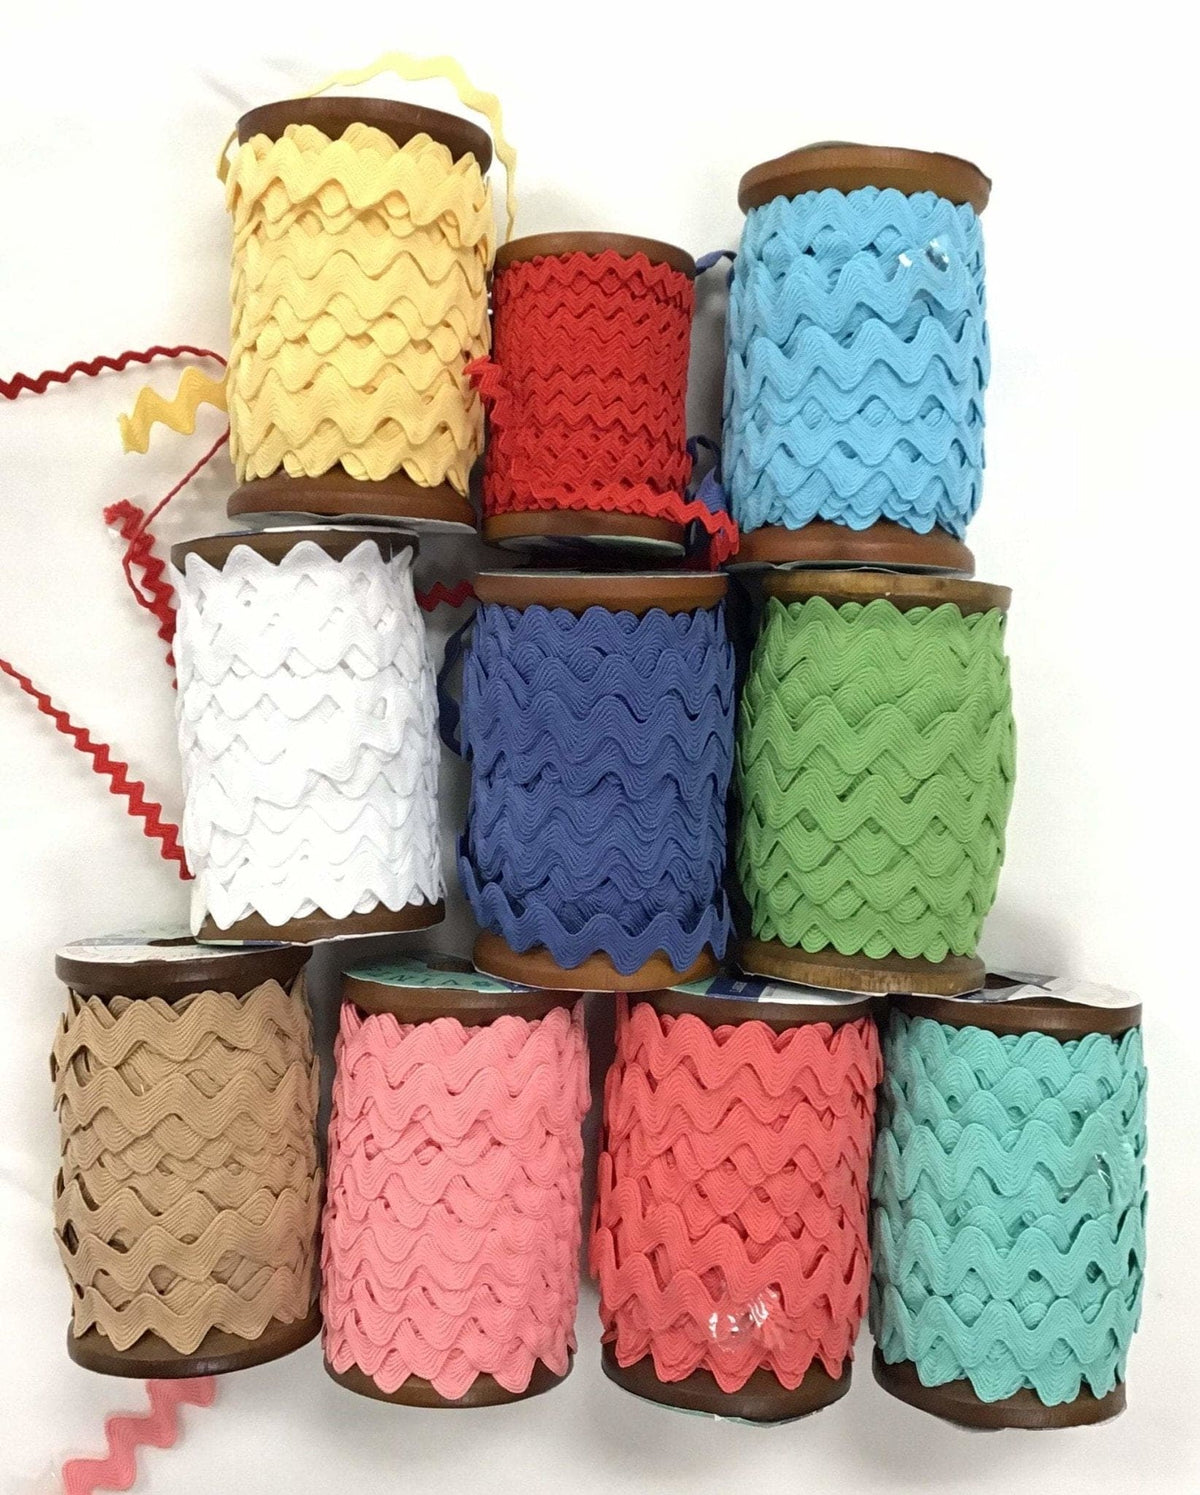  Vintage Knitting Mushroom # ST-25445- i Cord Maker! Lori Holt-  Riley Blake- Wood- New in Box!